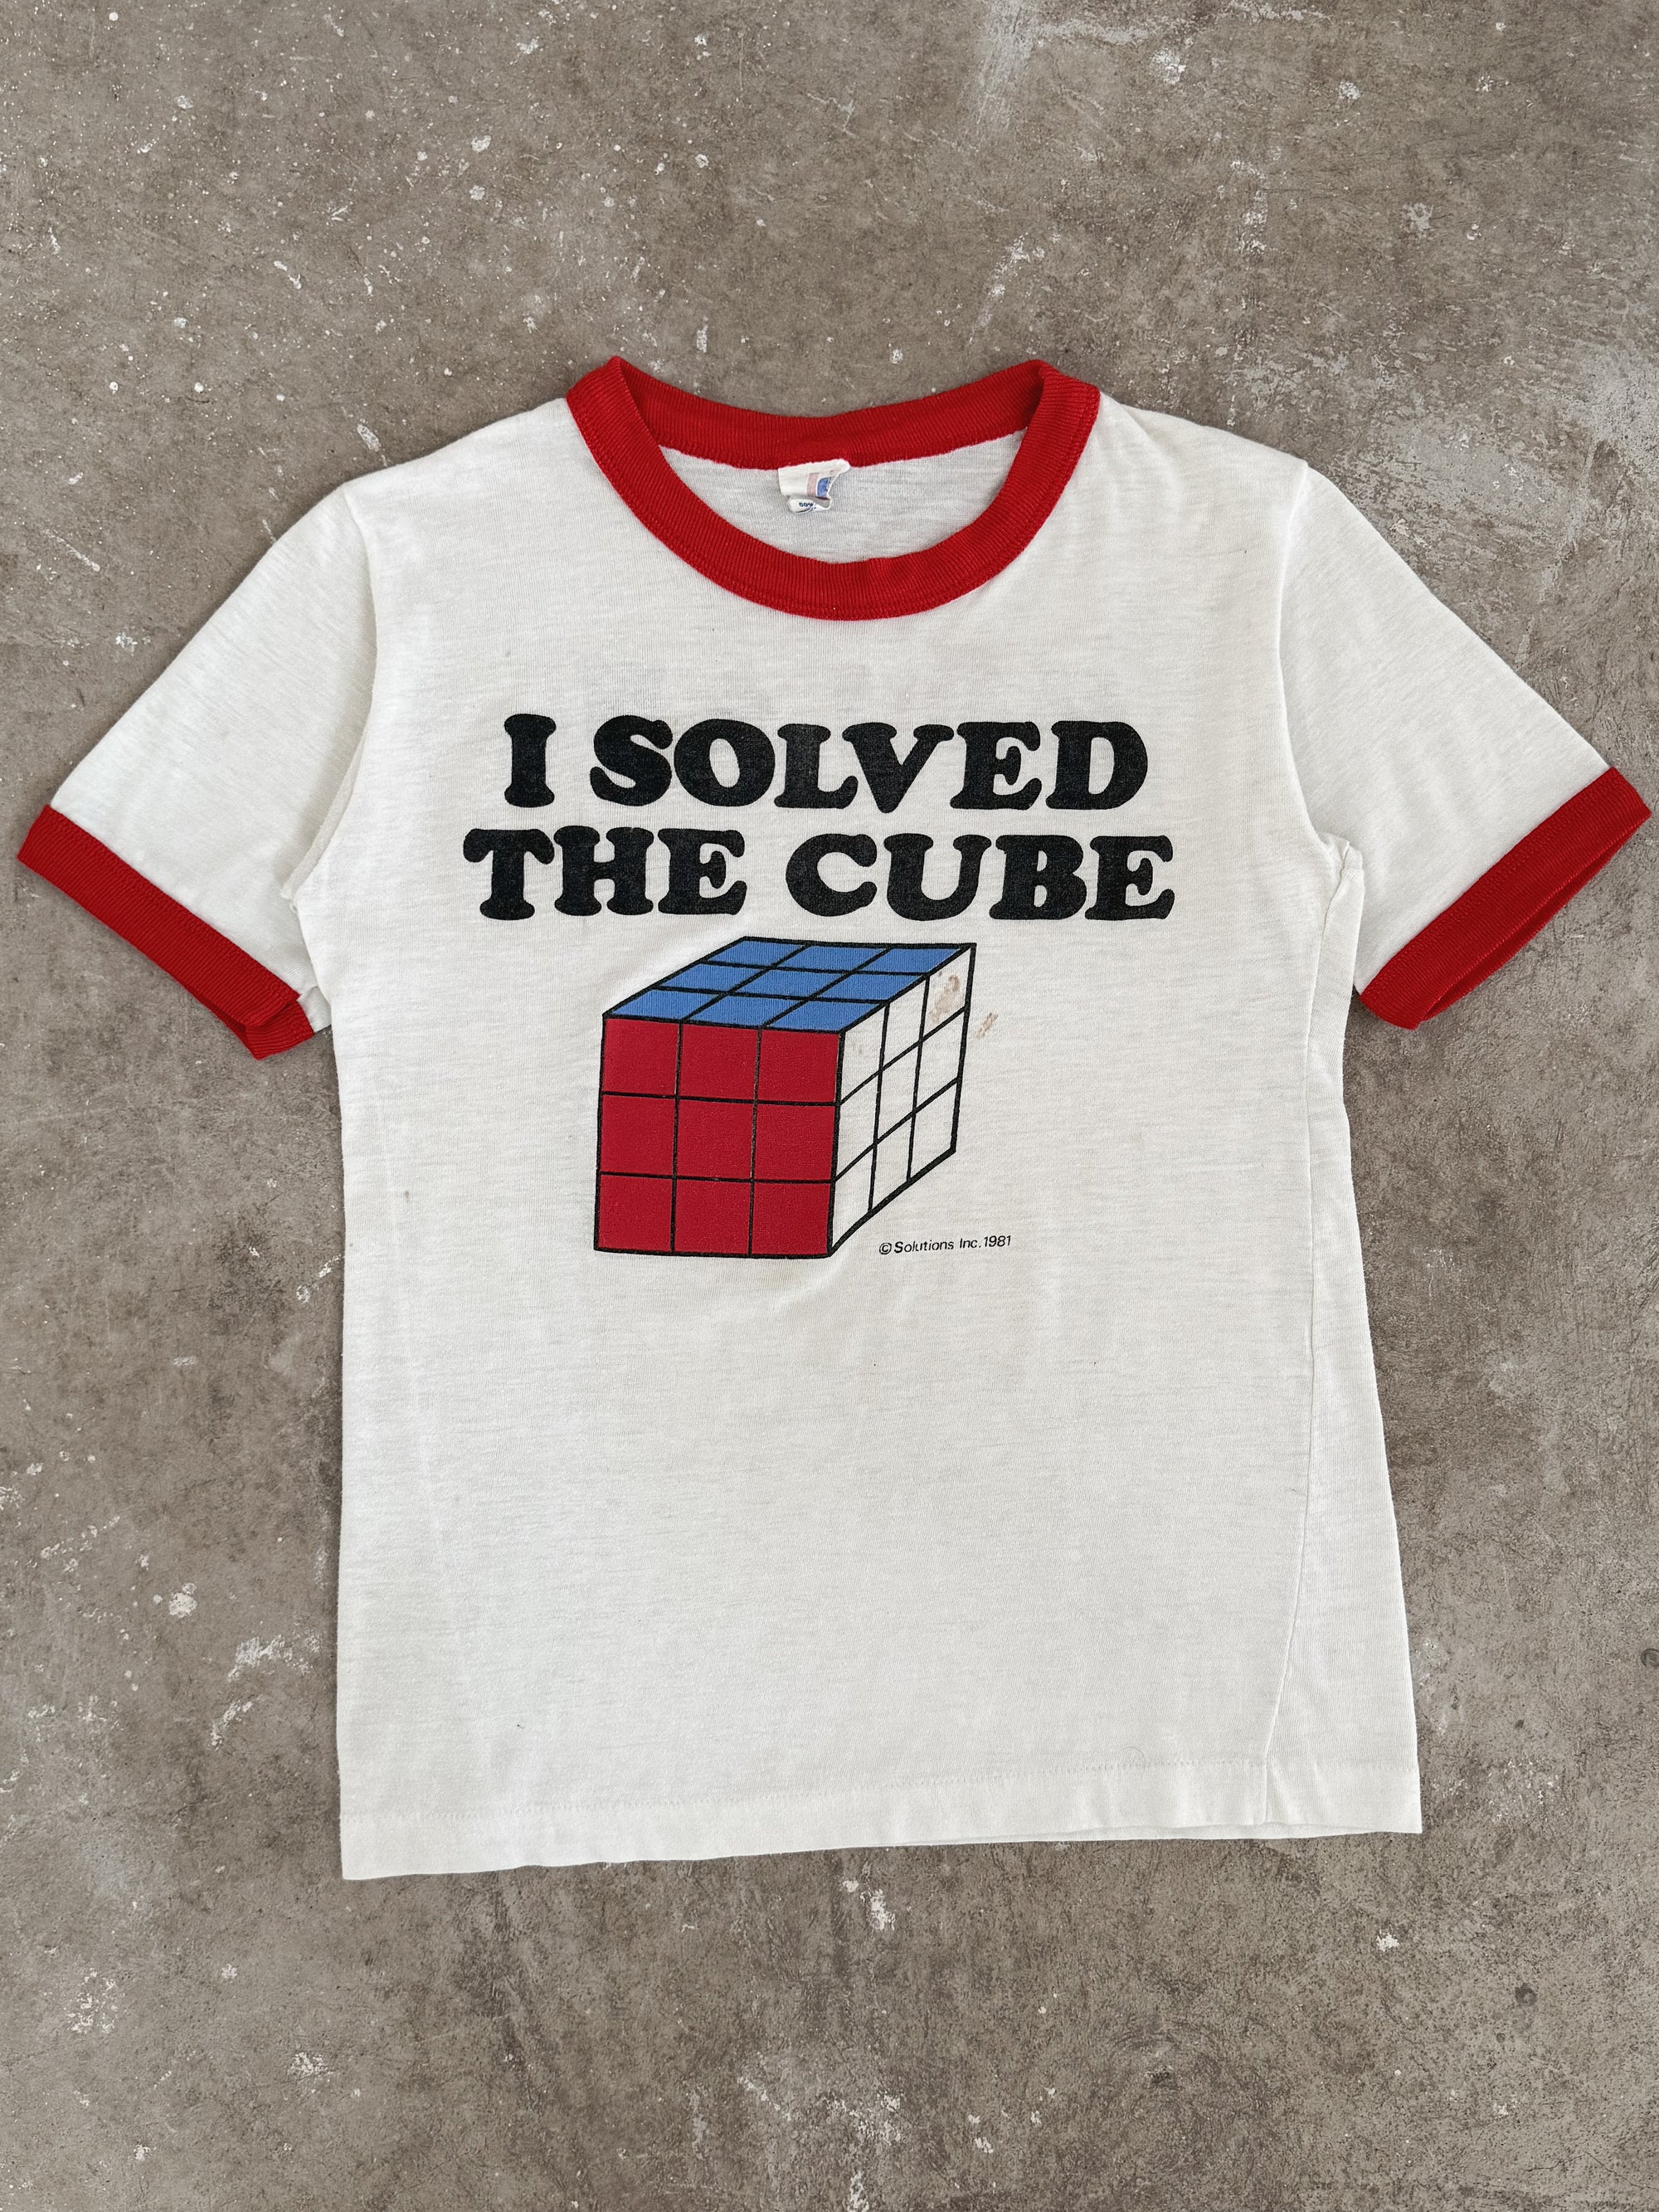 1980s "I Solved The Cube" Ringer Tee (XS)